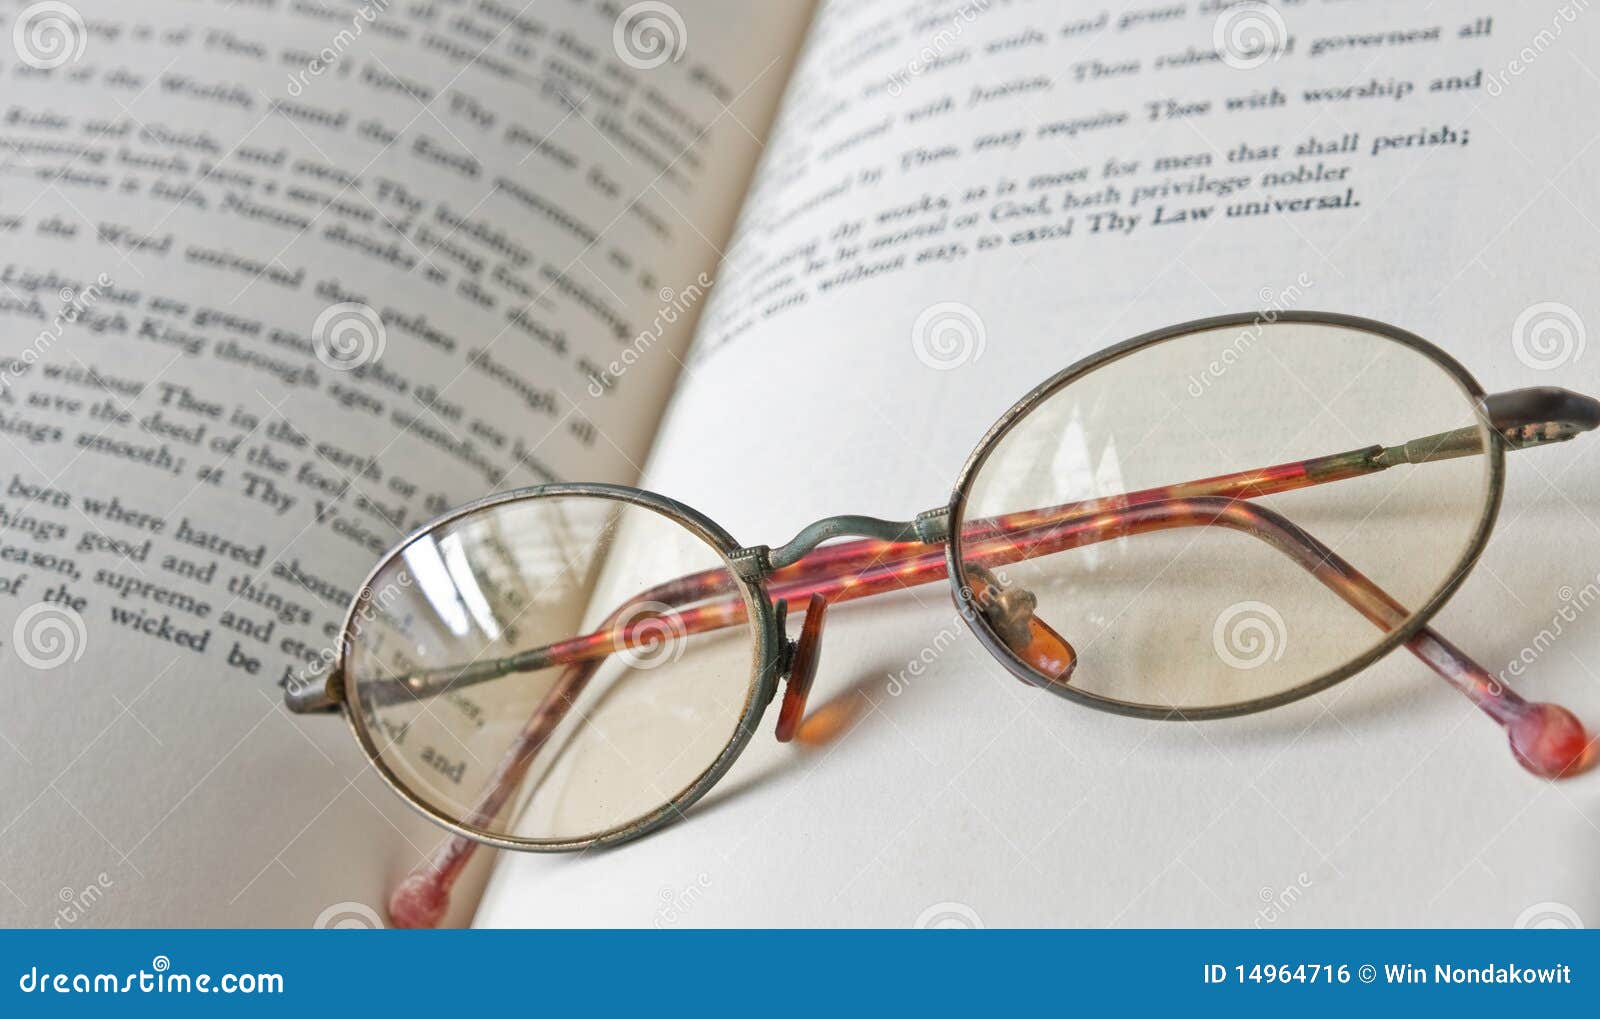 book & old eyeglass